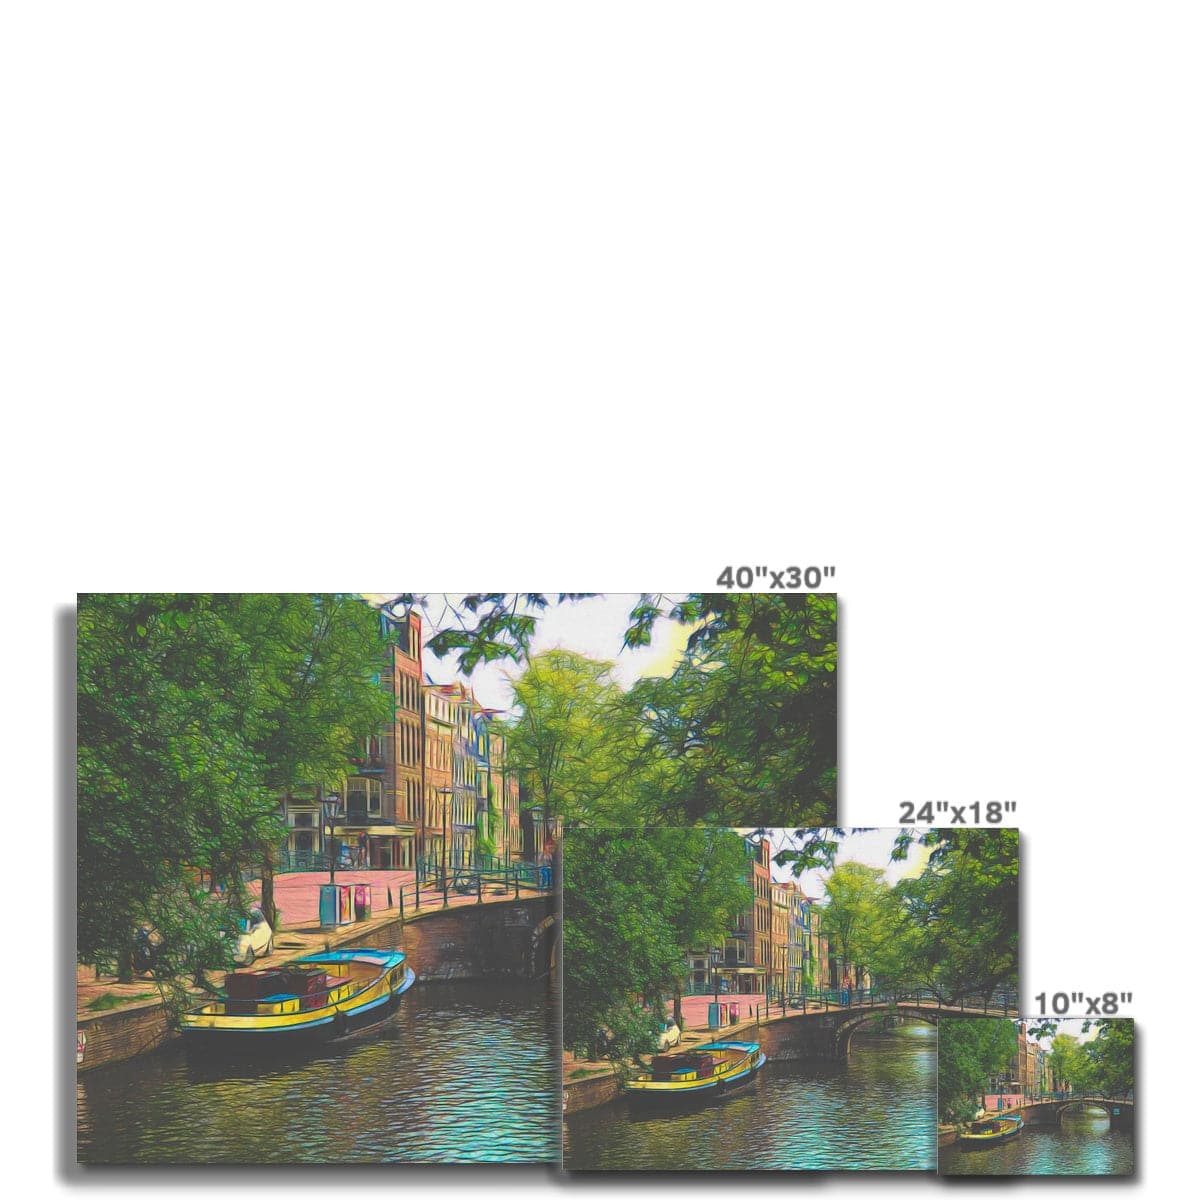 Boat and bridge in Amsterdam,   Art on Canvas, by Ingrid Hütten